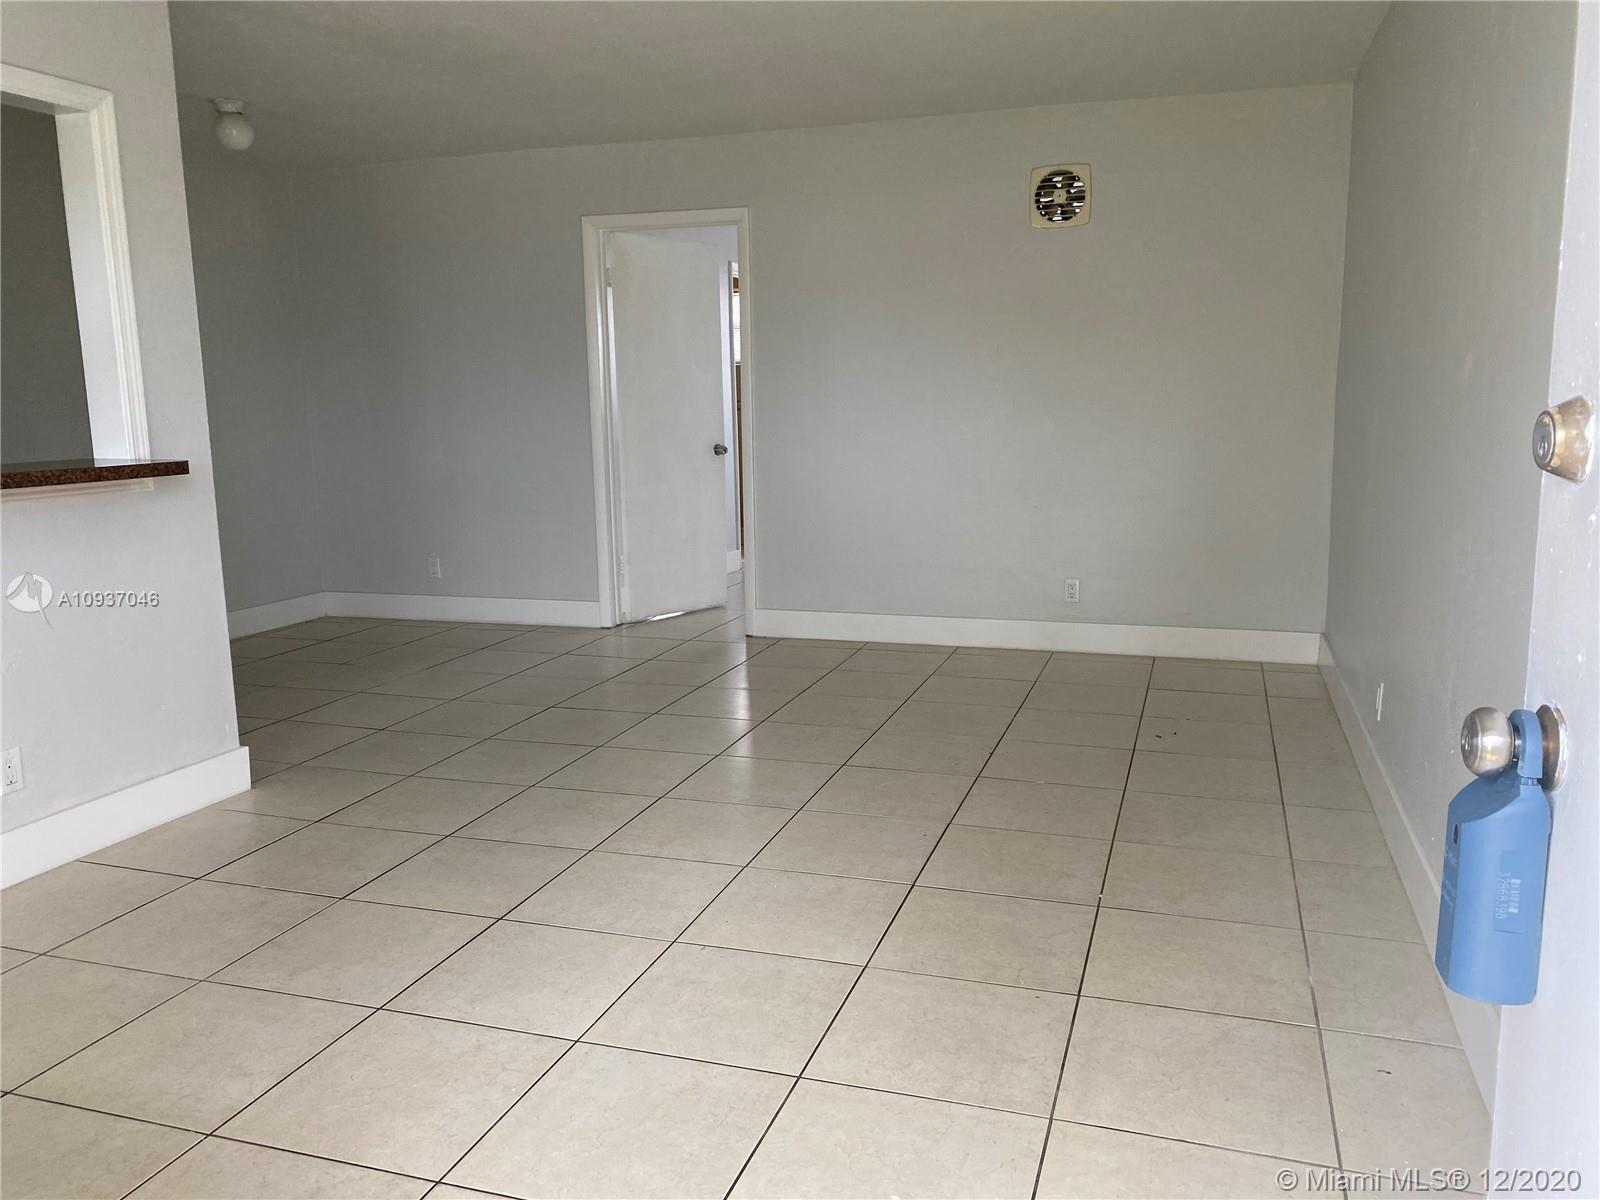 an empty room with a bathroom